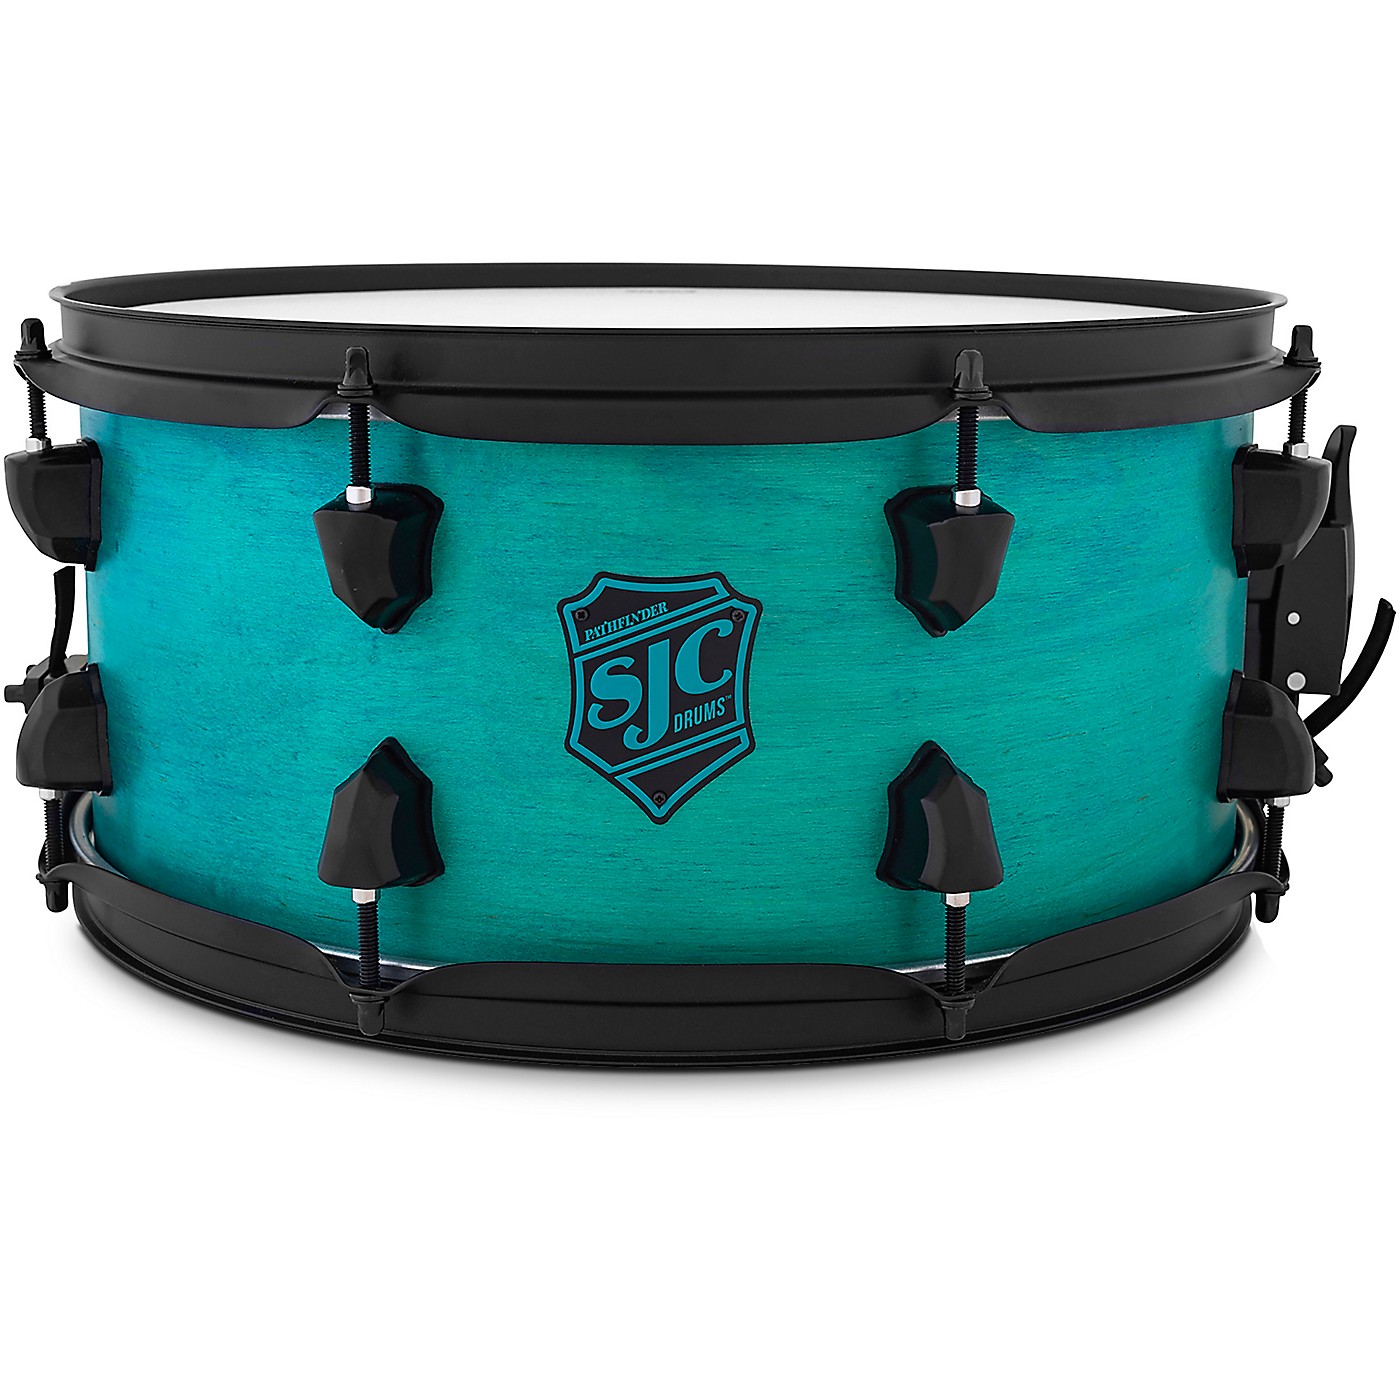 SJC Drums Pathfinder Snare Drum thumbnail